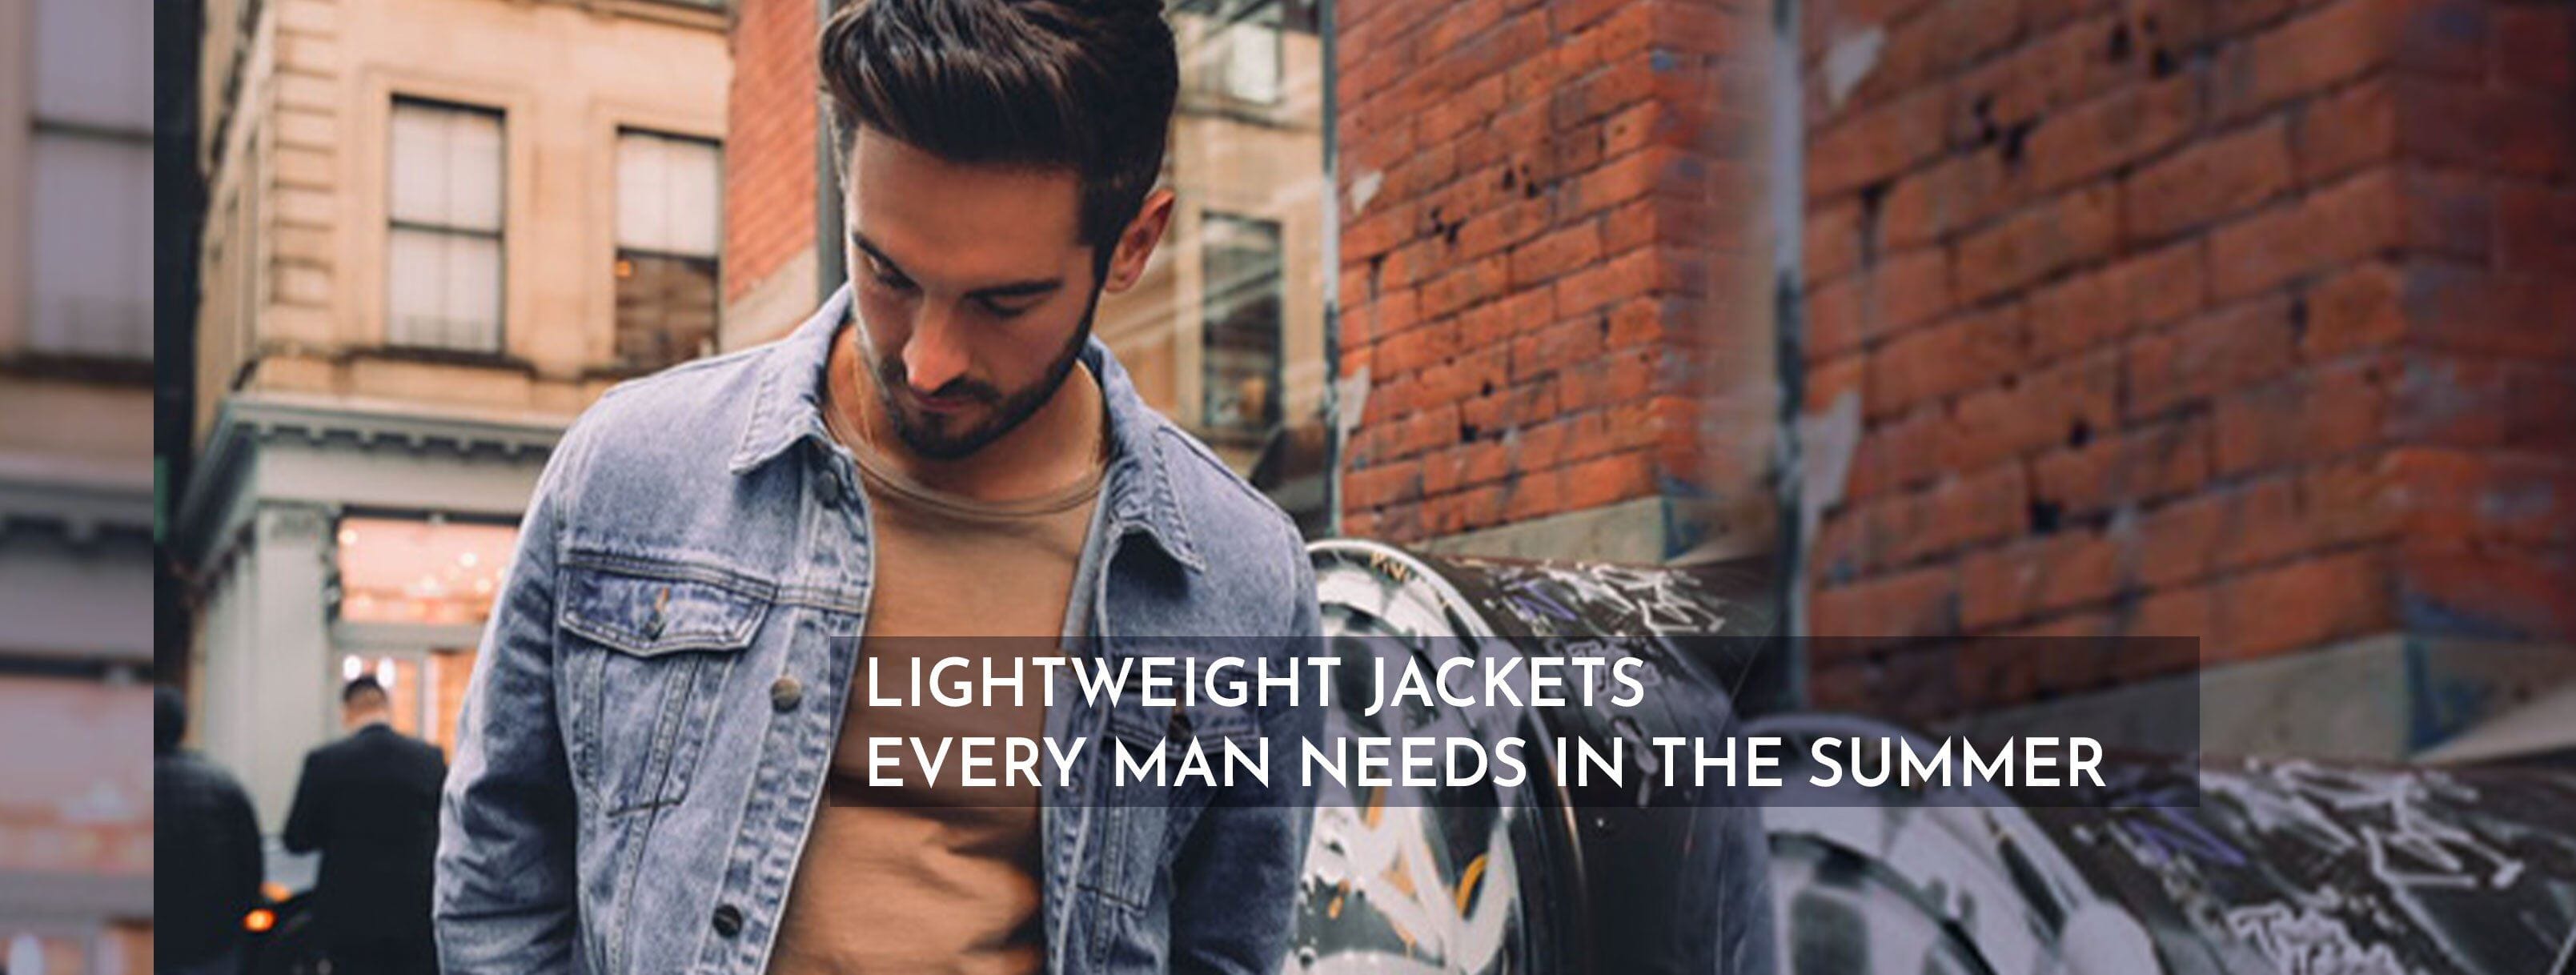 Lightweight Jackets Every Man Needs in the Summer